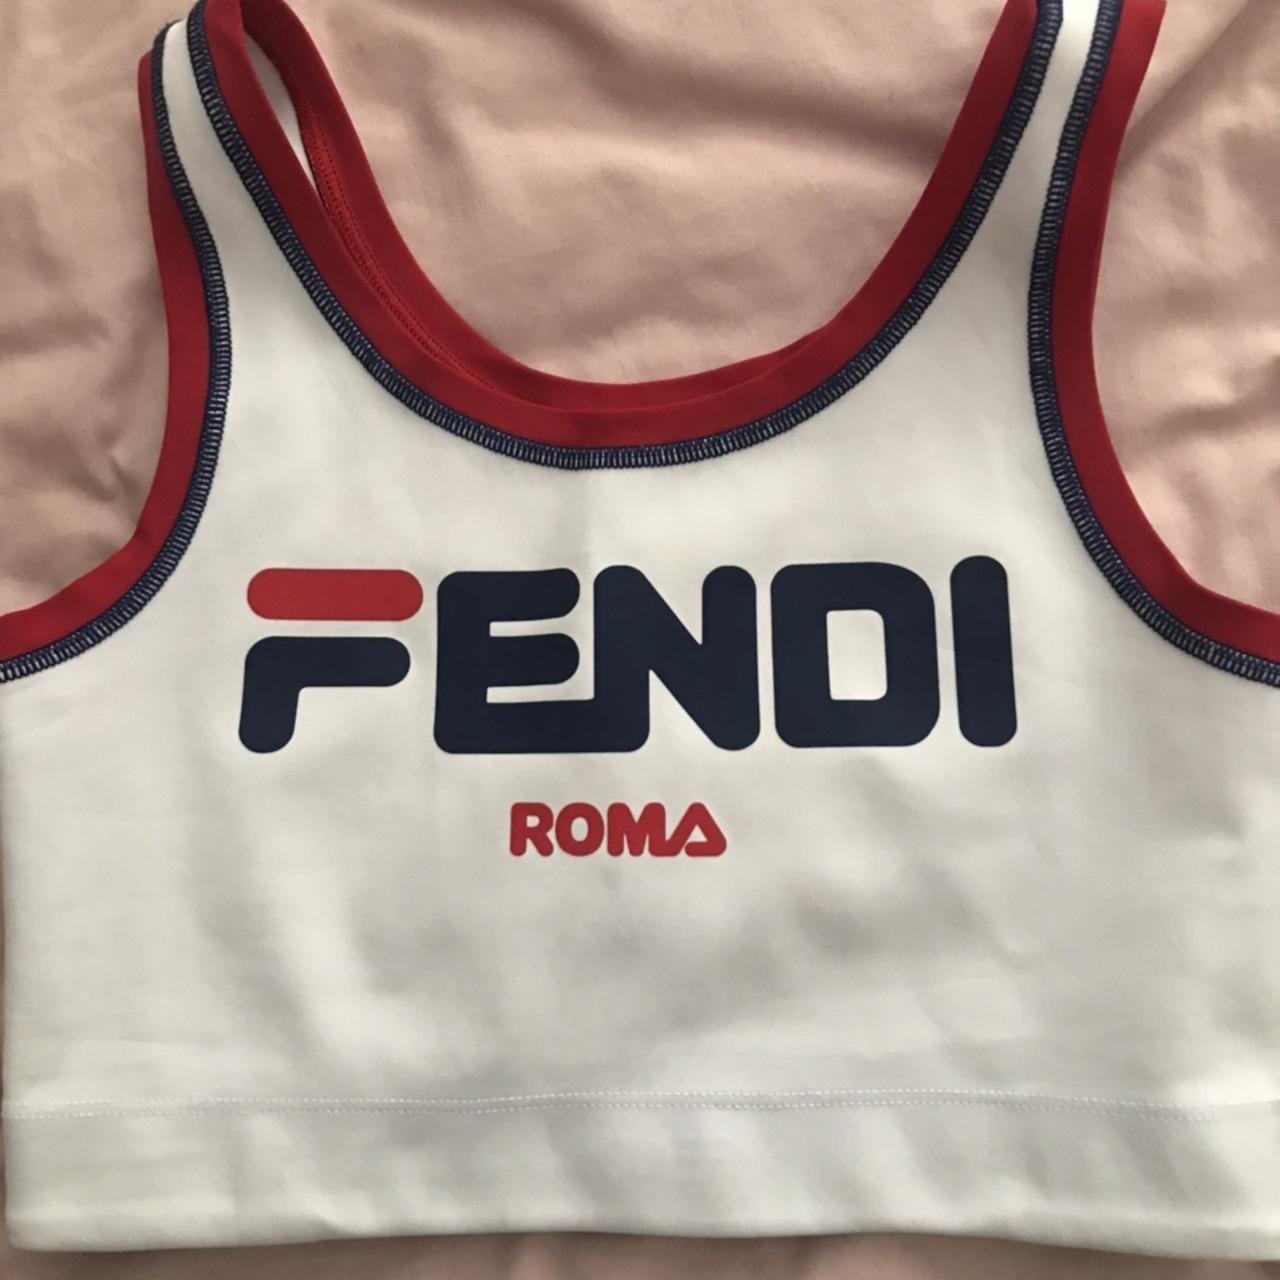 Fendi sports bra top ordered from matchesfashion - Depop